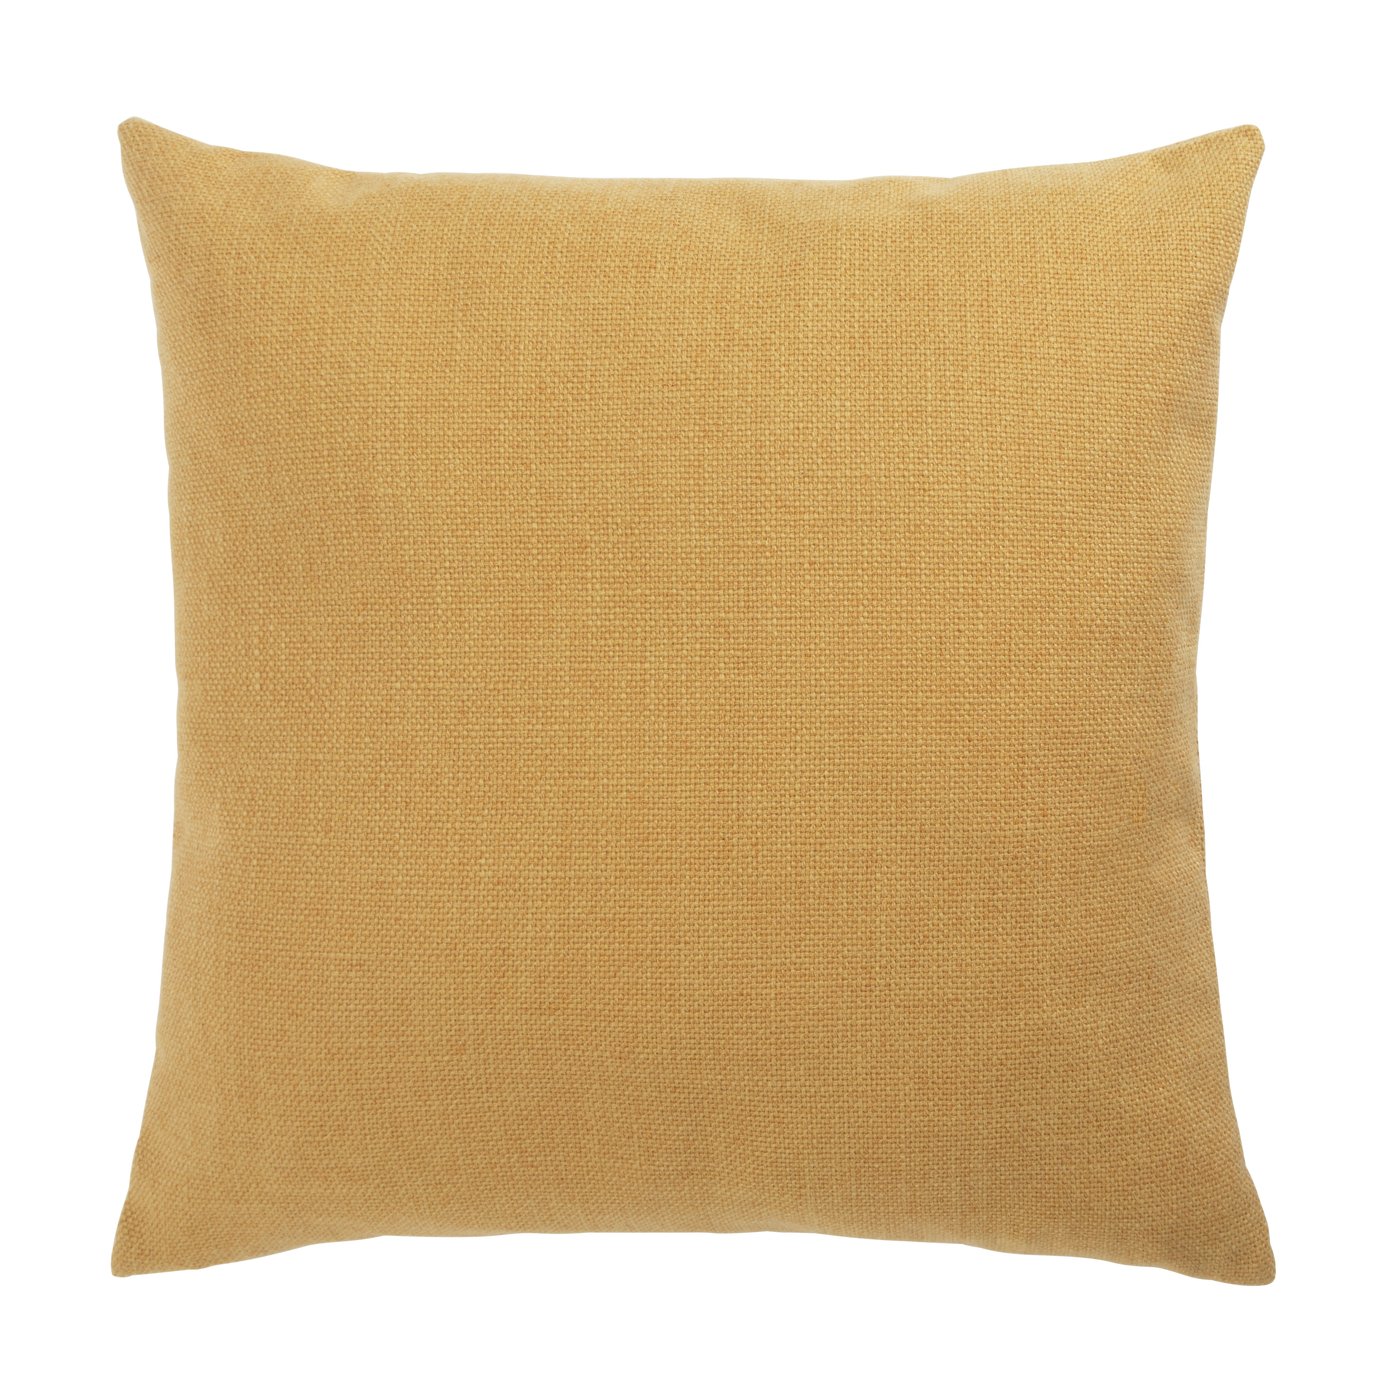 Habitat Basket Weave Cushion Cover - Mustard - 43x43cm